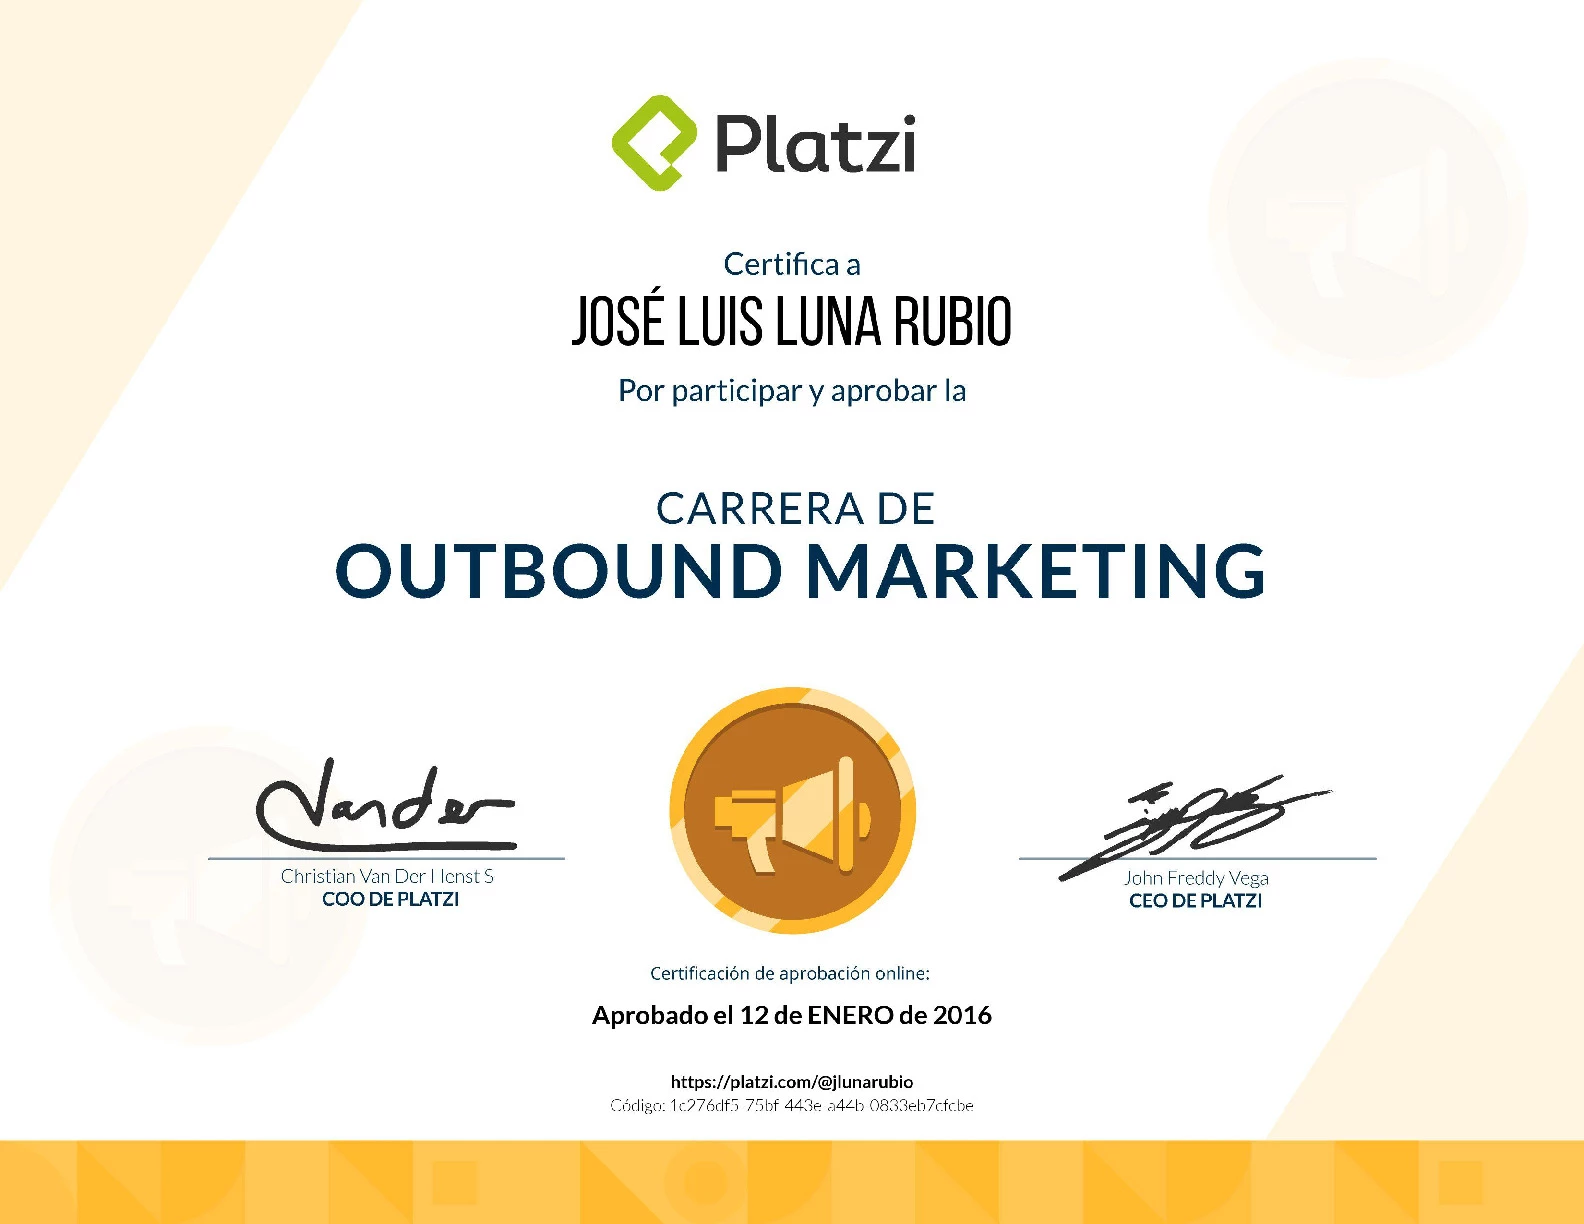 Carrera Platzi Jose Luis Luna Rubio - Outbound Marketing